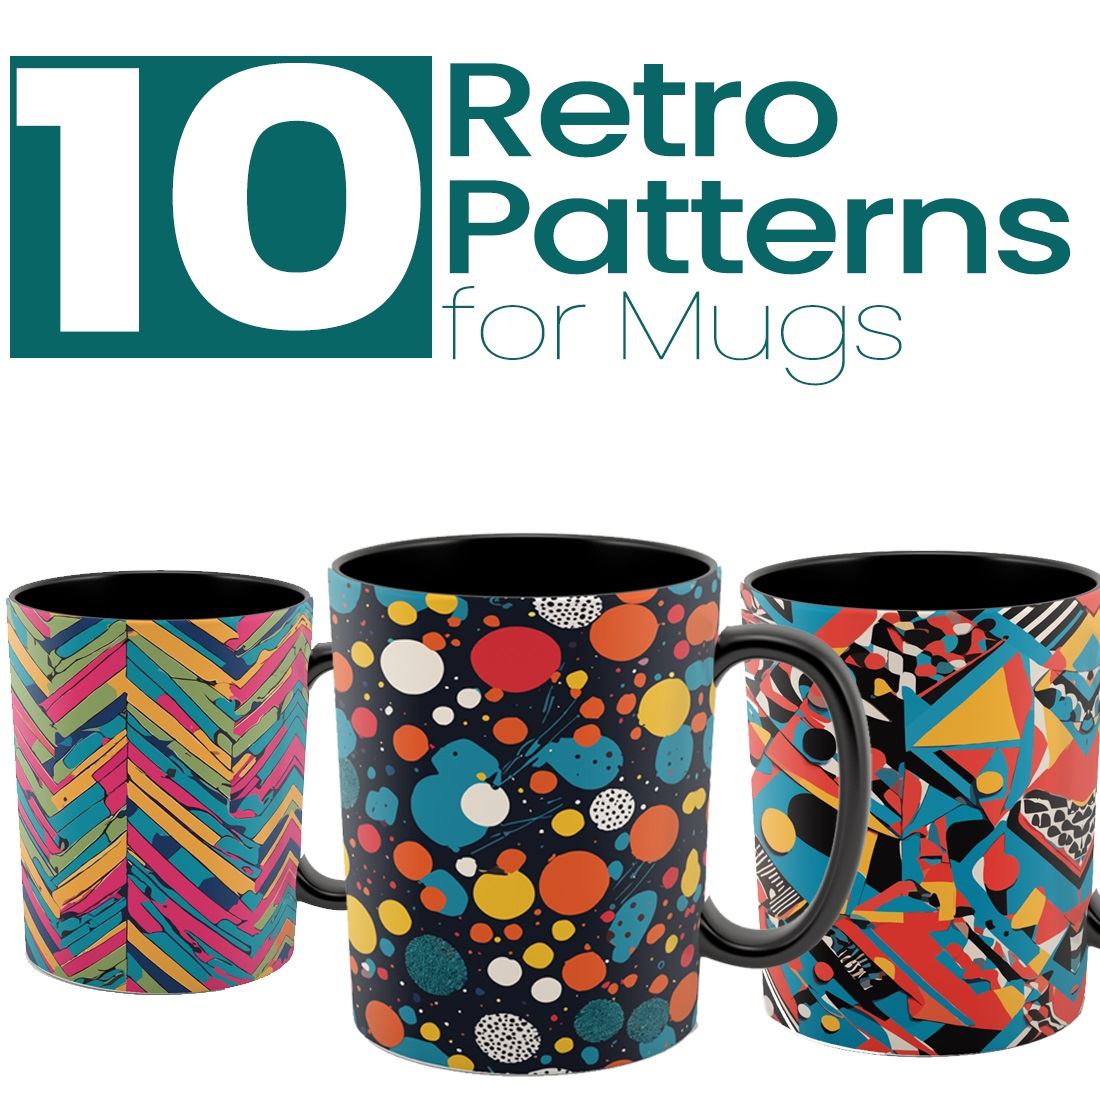 10 Retro Theme Print-Ready Patterns for Mug Printing cover image.